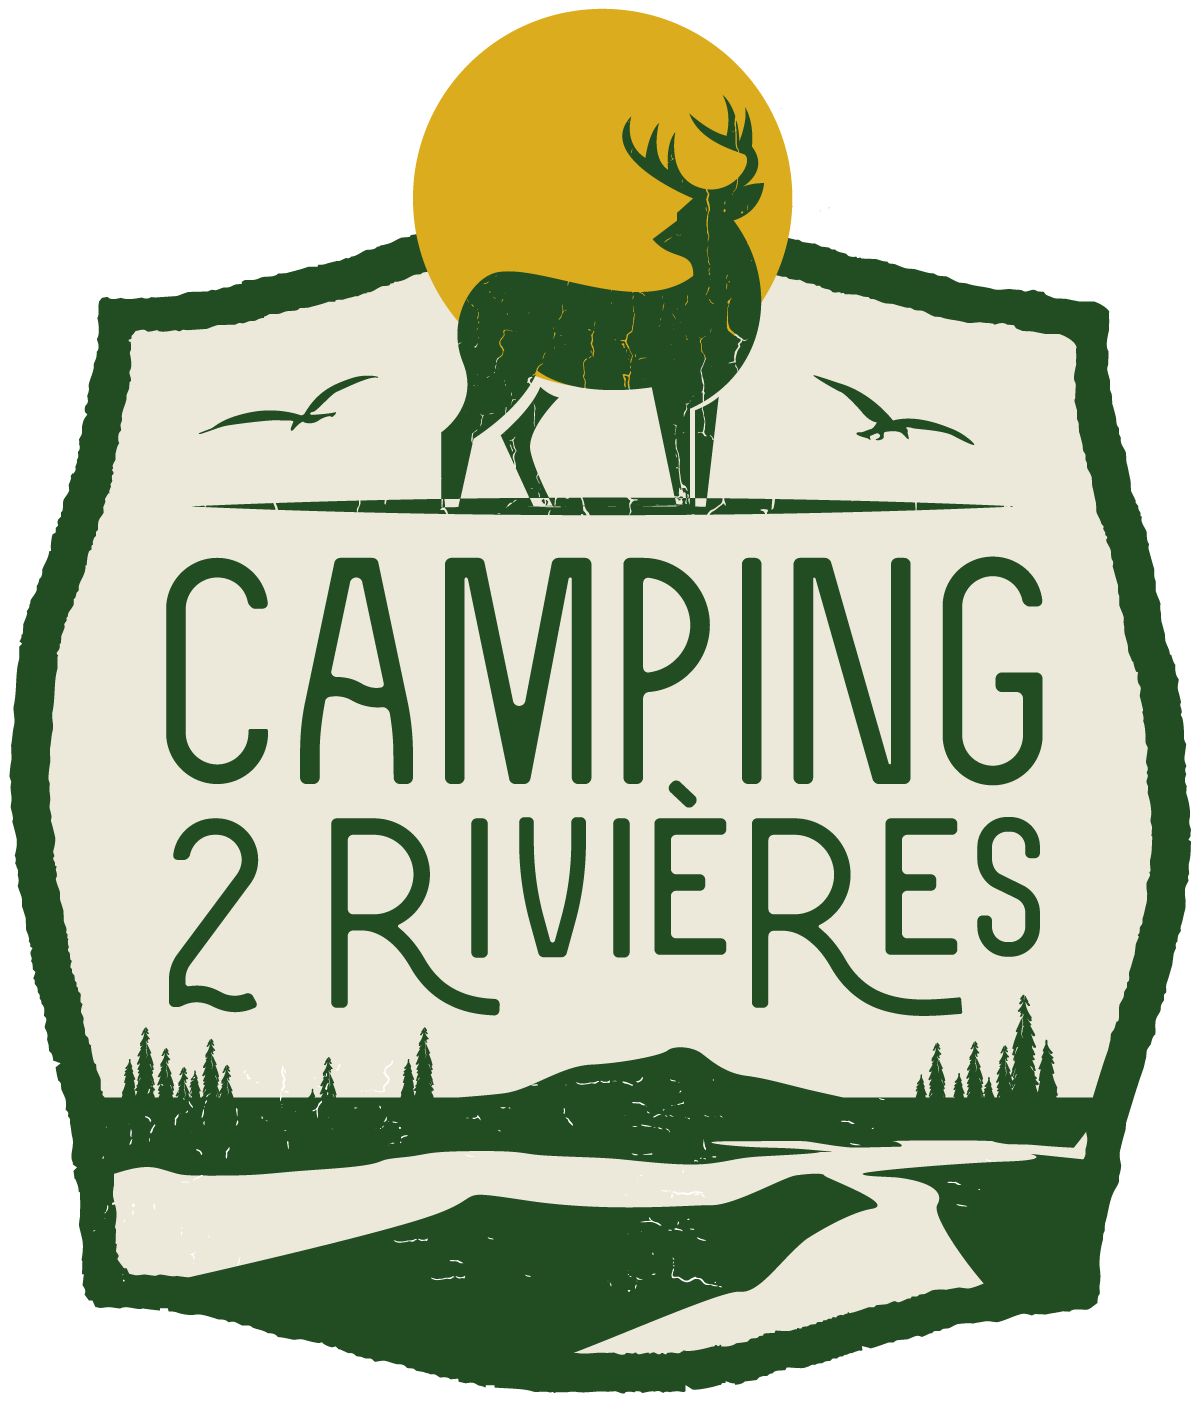 Camping 2 rivières